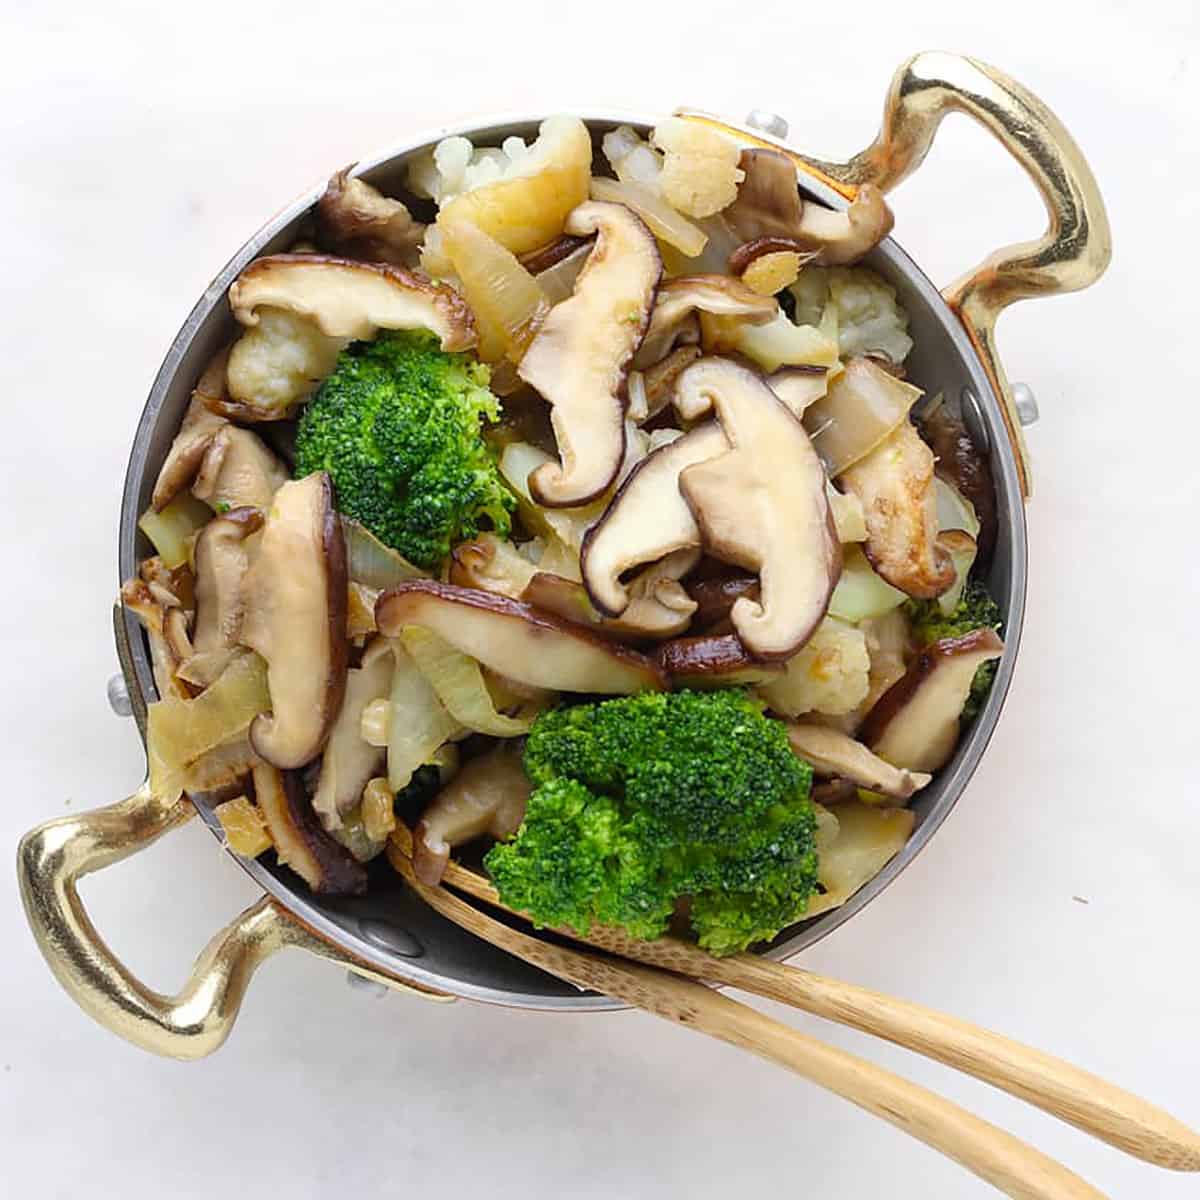 mushroom shiitake stir fry in a pan.